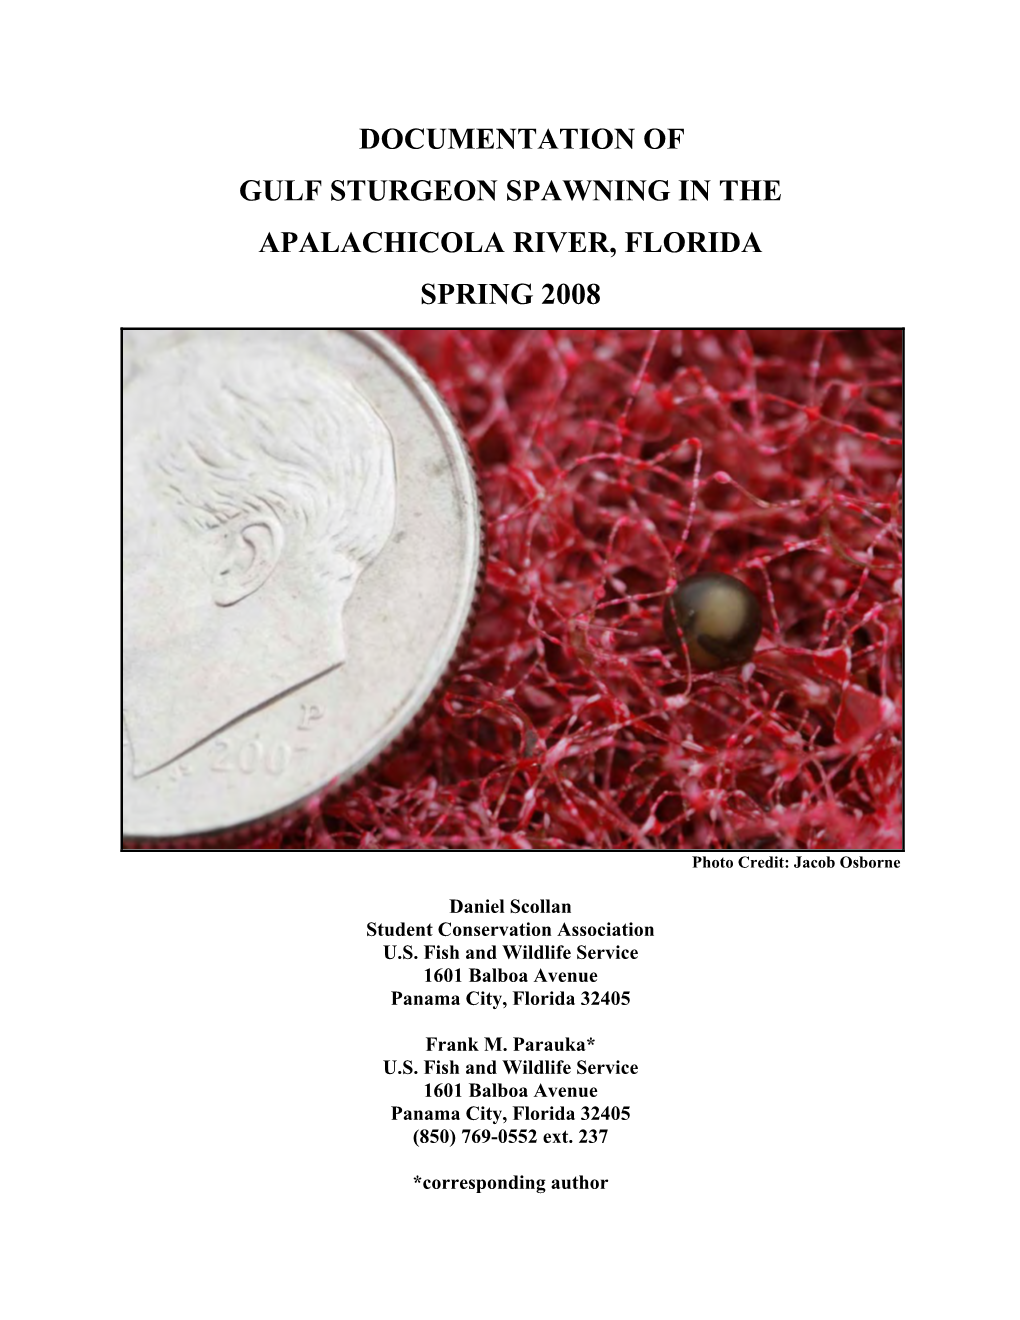 Documentation of Gulf Sturgeon Spawning in the Apalachicola River, Florida Spring 2008